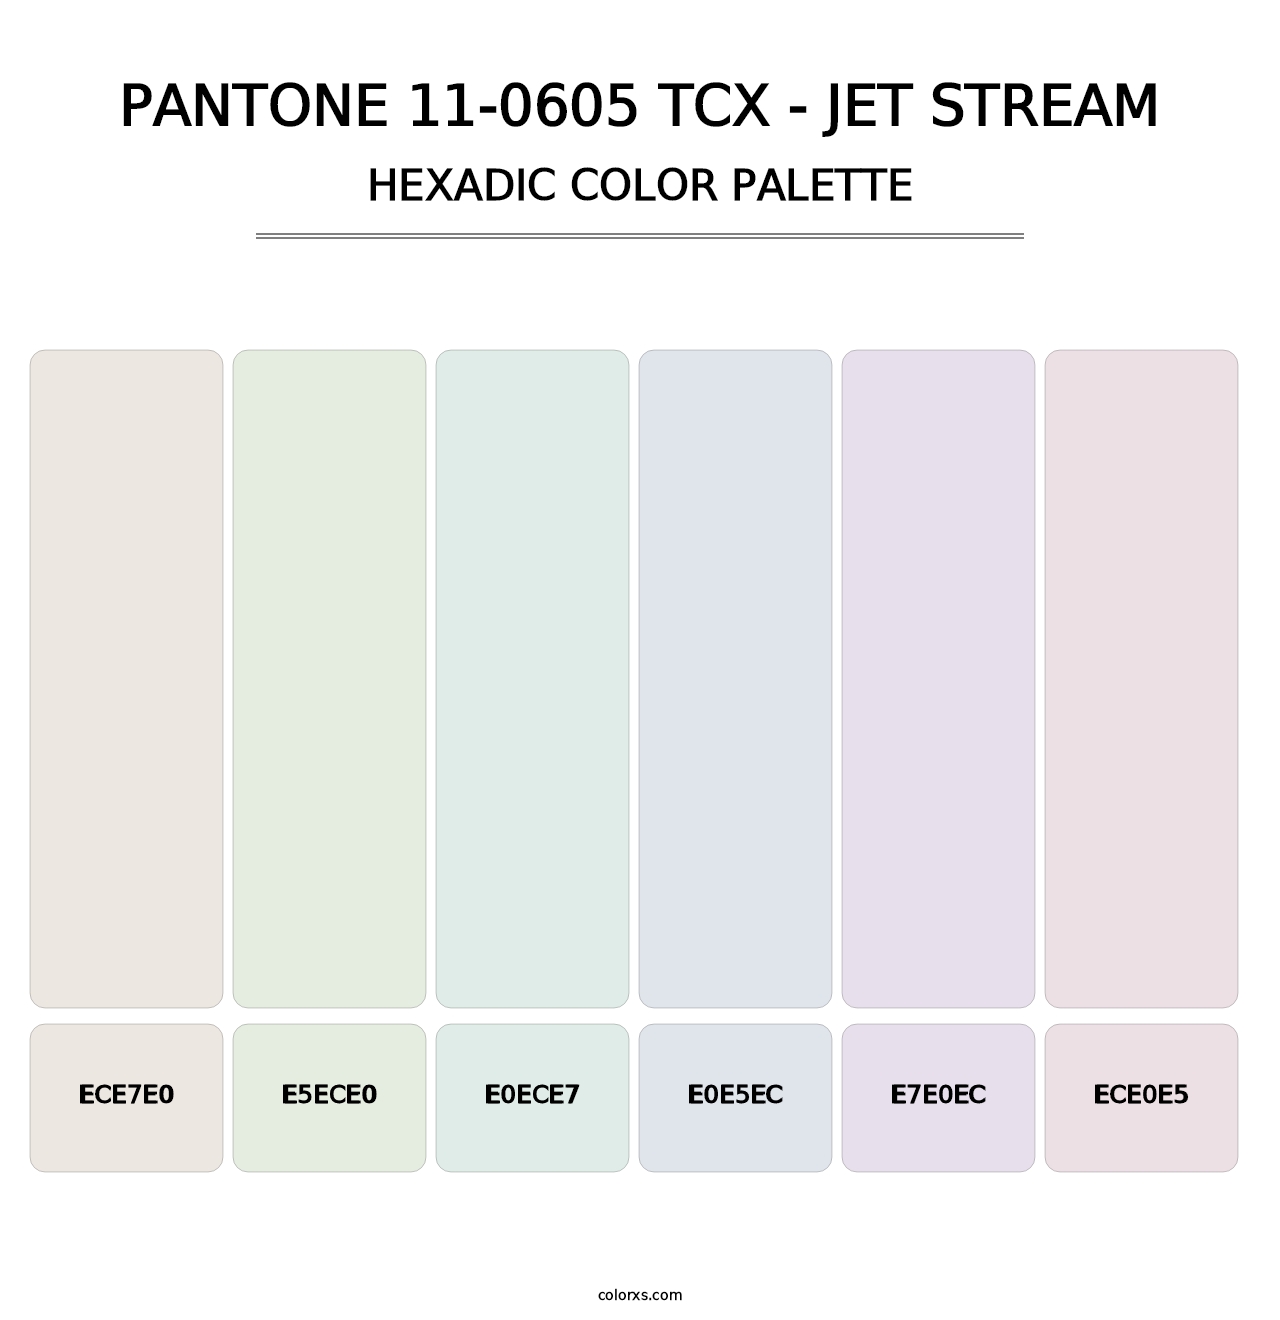 PANTONE 11-0605 TCX - Jet Stream - Hexadic Color Palette